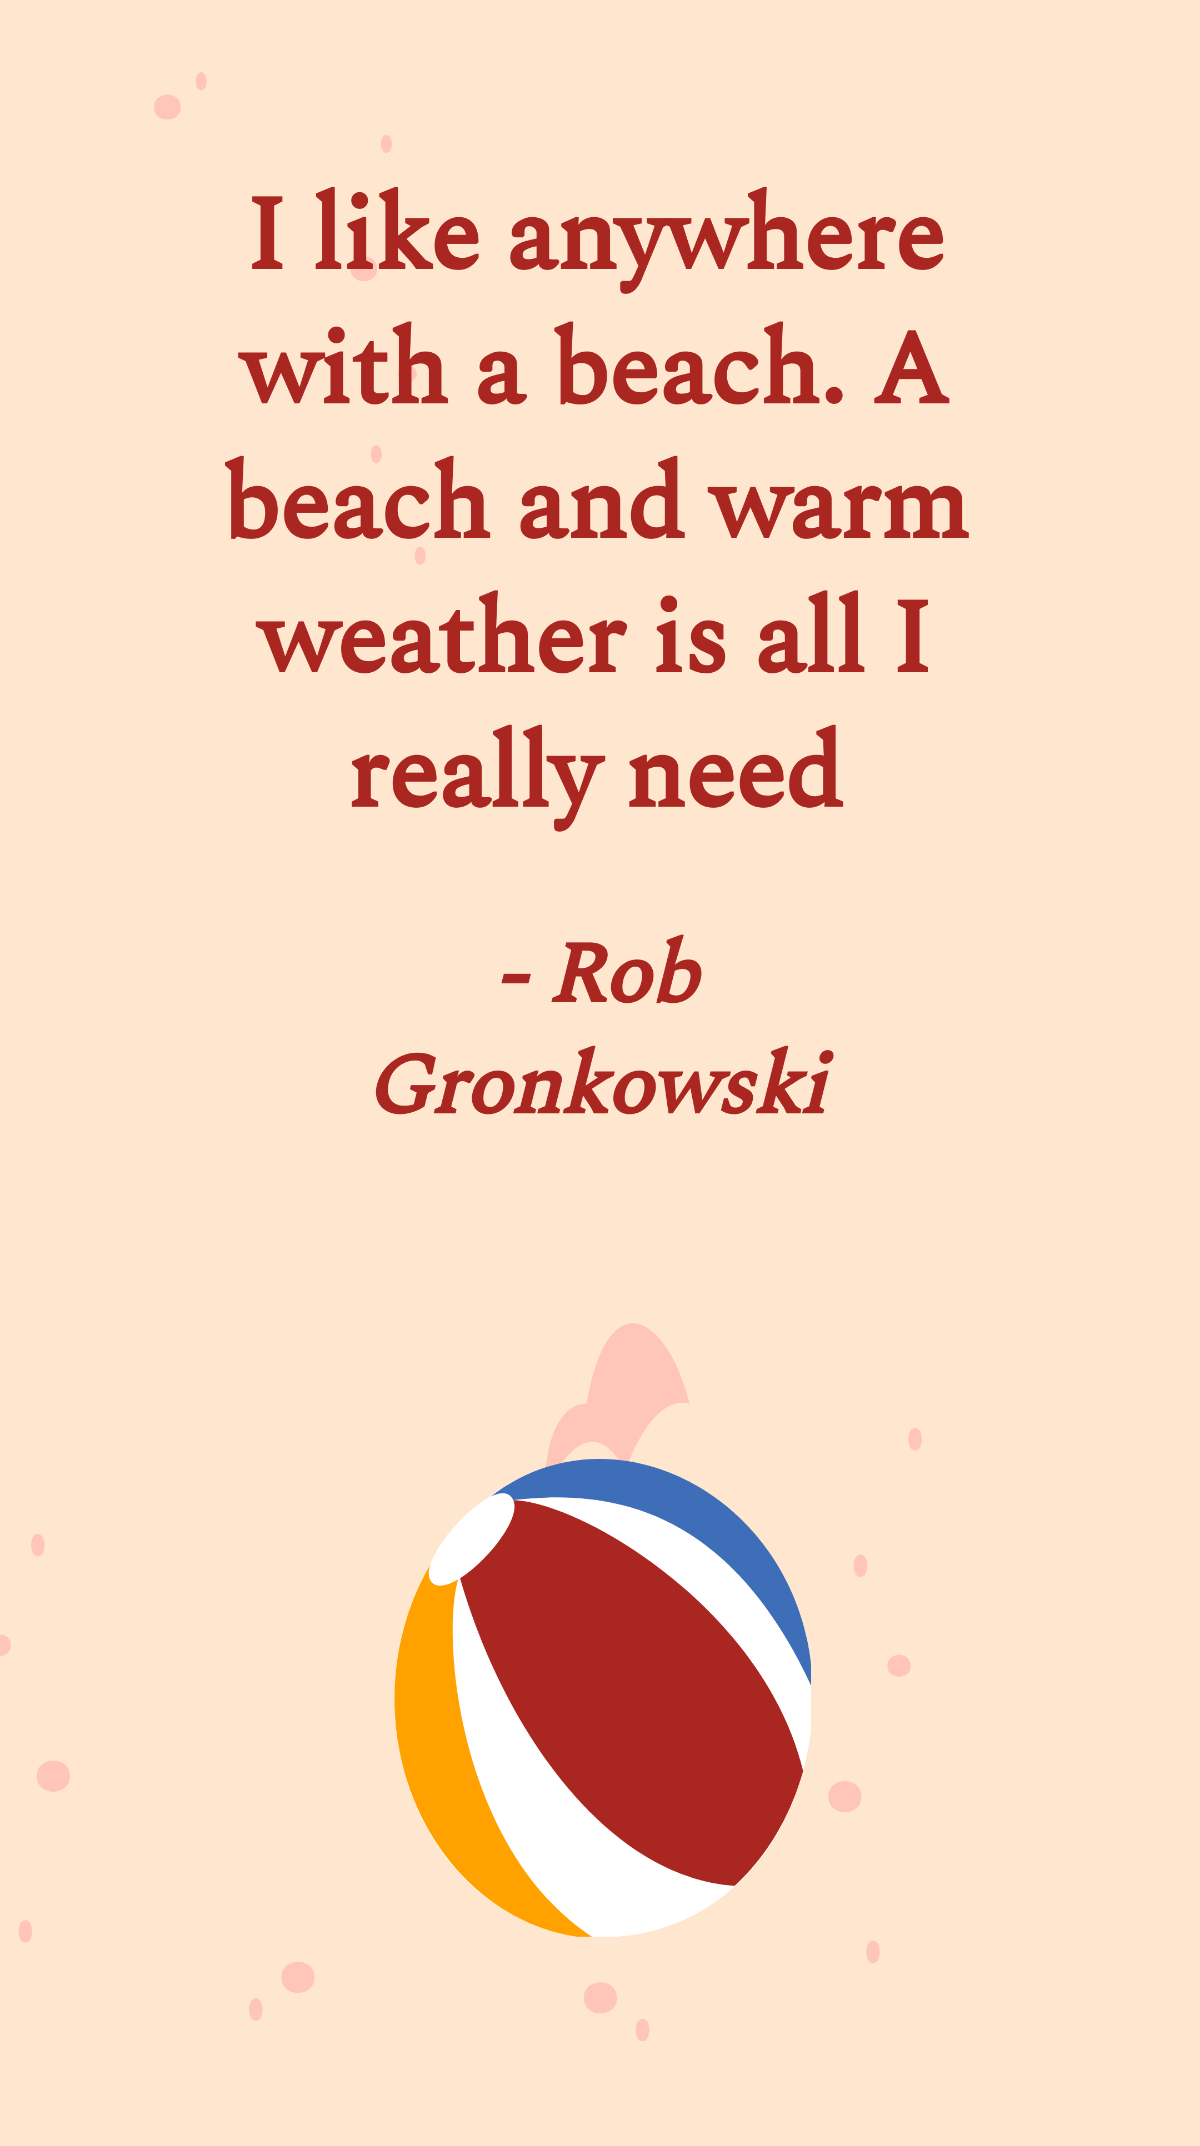 Rob Gronkowski - I like anywhere with a beach. A beach and warm weather is all I really need